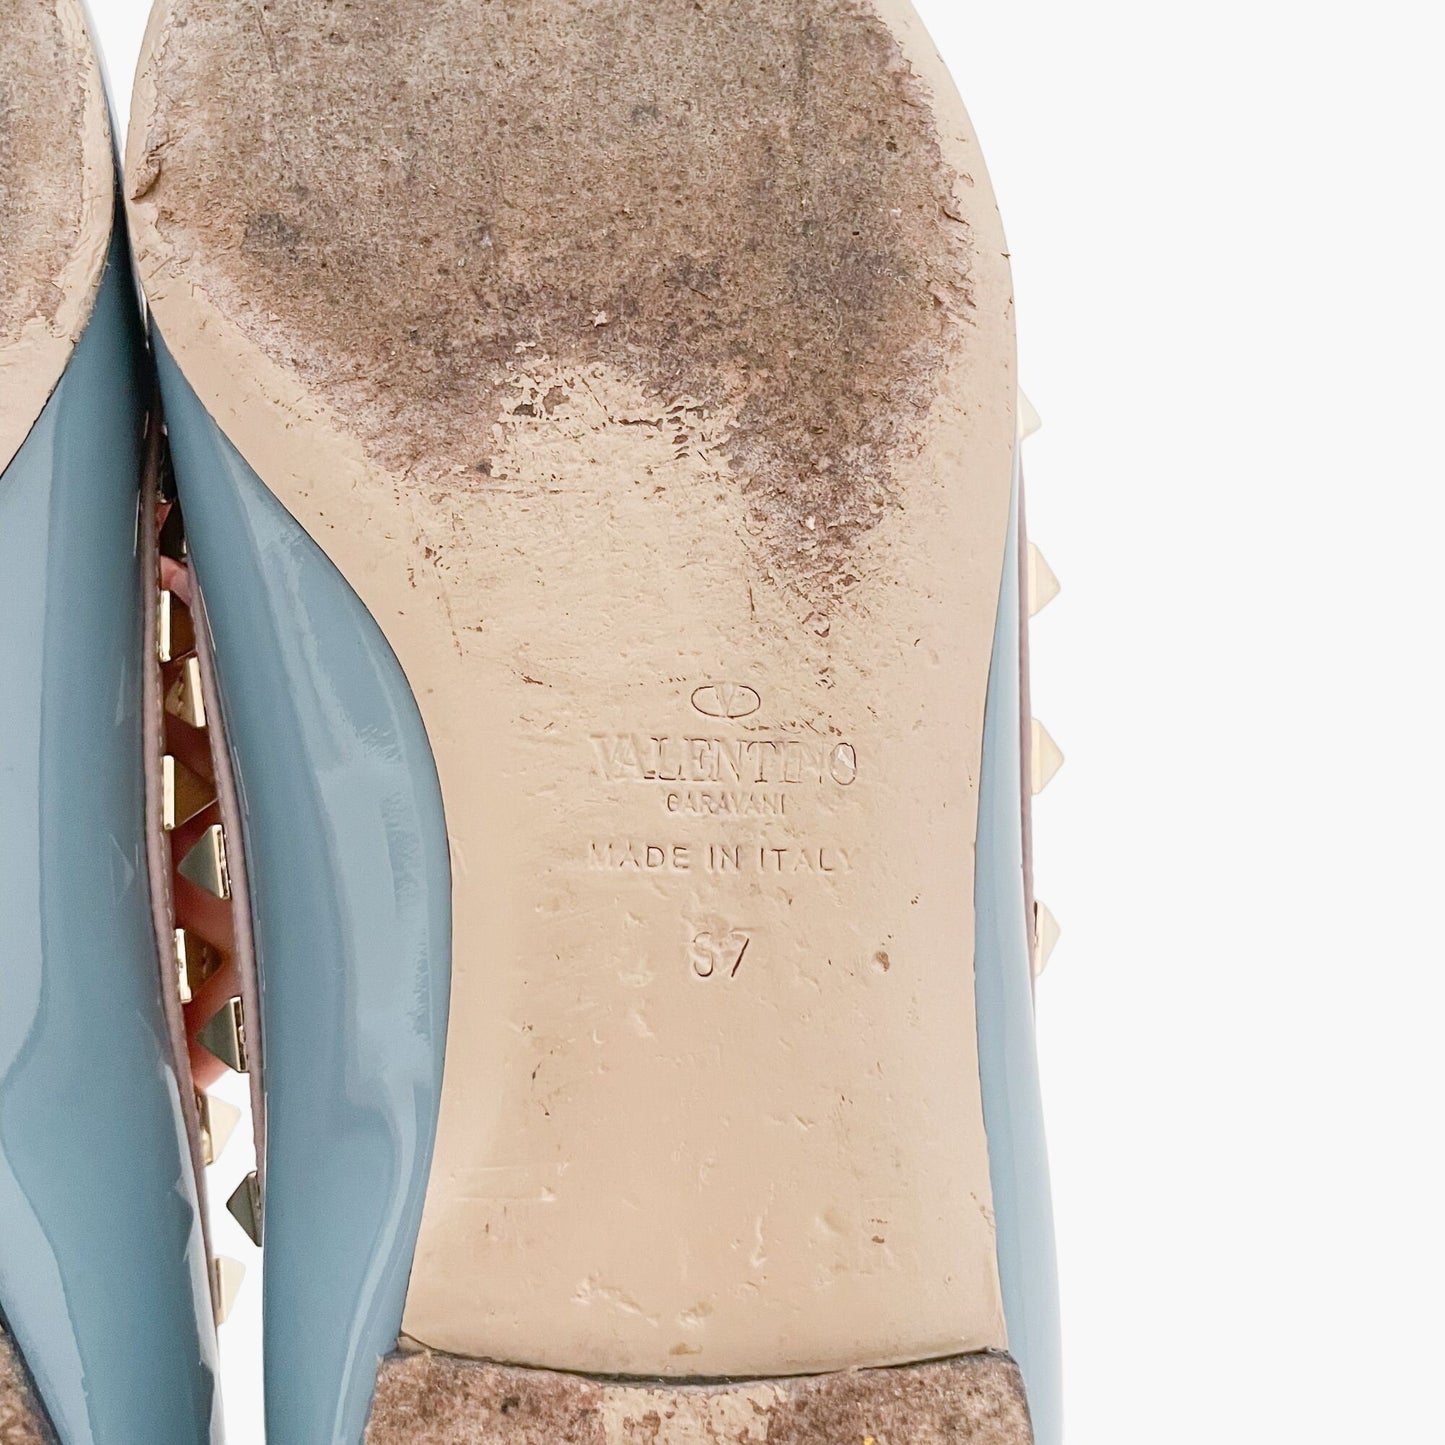 Valentino Garavani Rockstud Ballet Flat in Light Blue Patent Leather Size 37